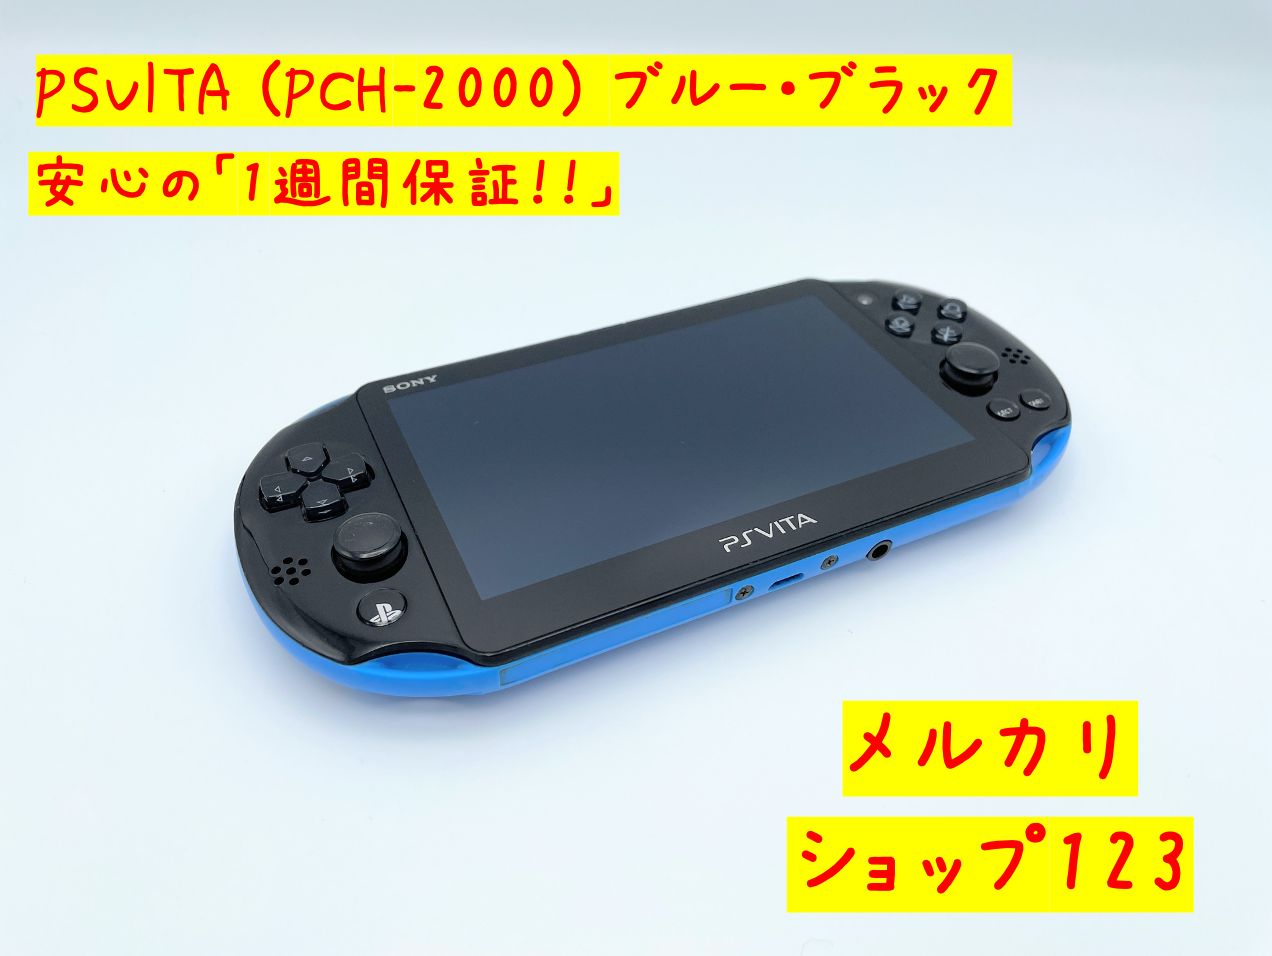 PSVITA 本体 Wi-Fiモデル ブルー・ブラック (PCH-2000) - 【インボイス